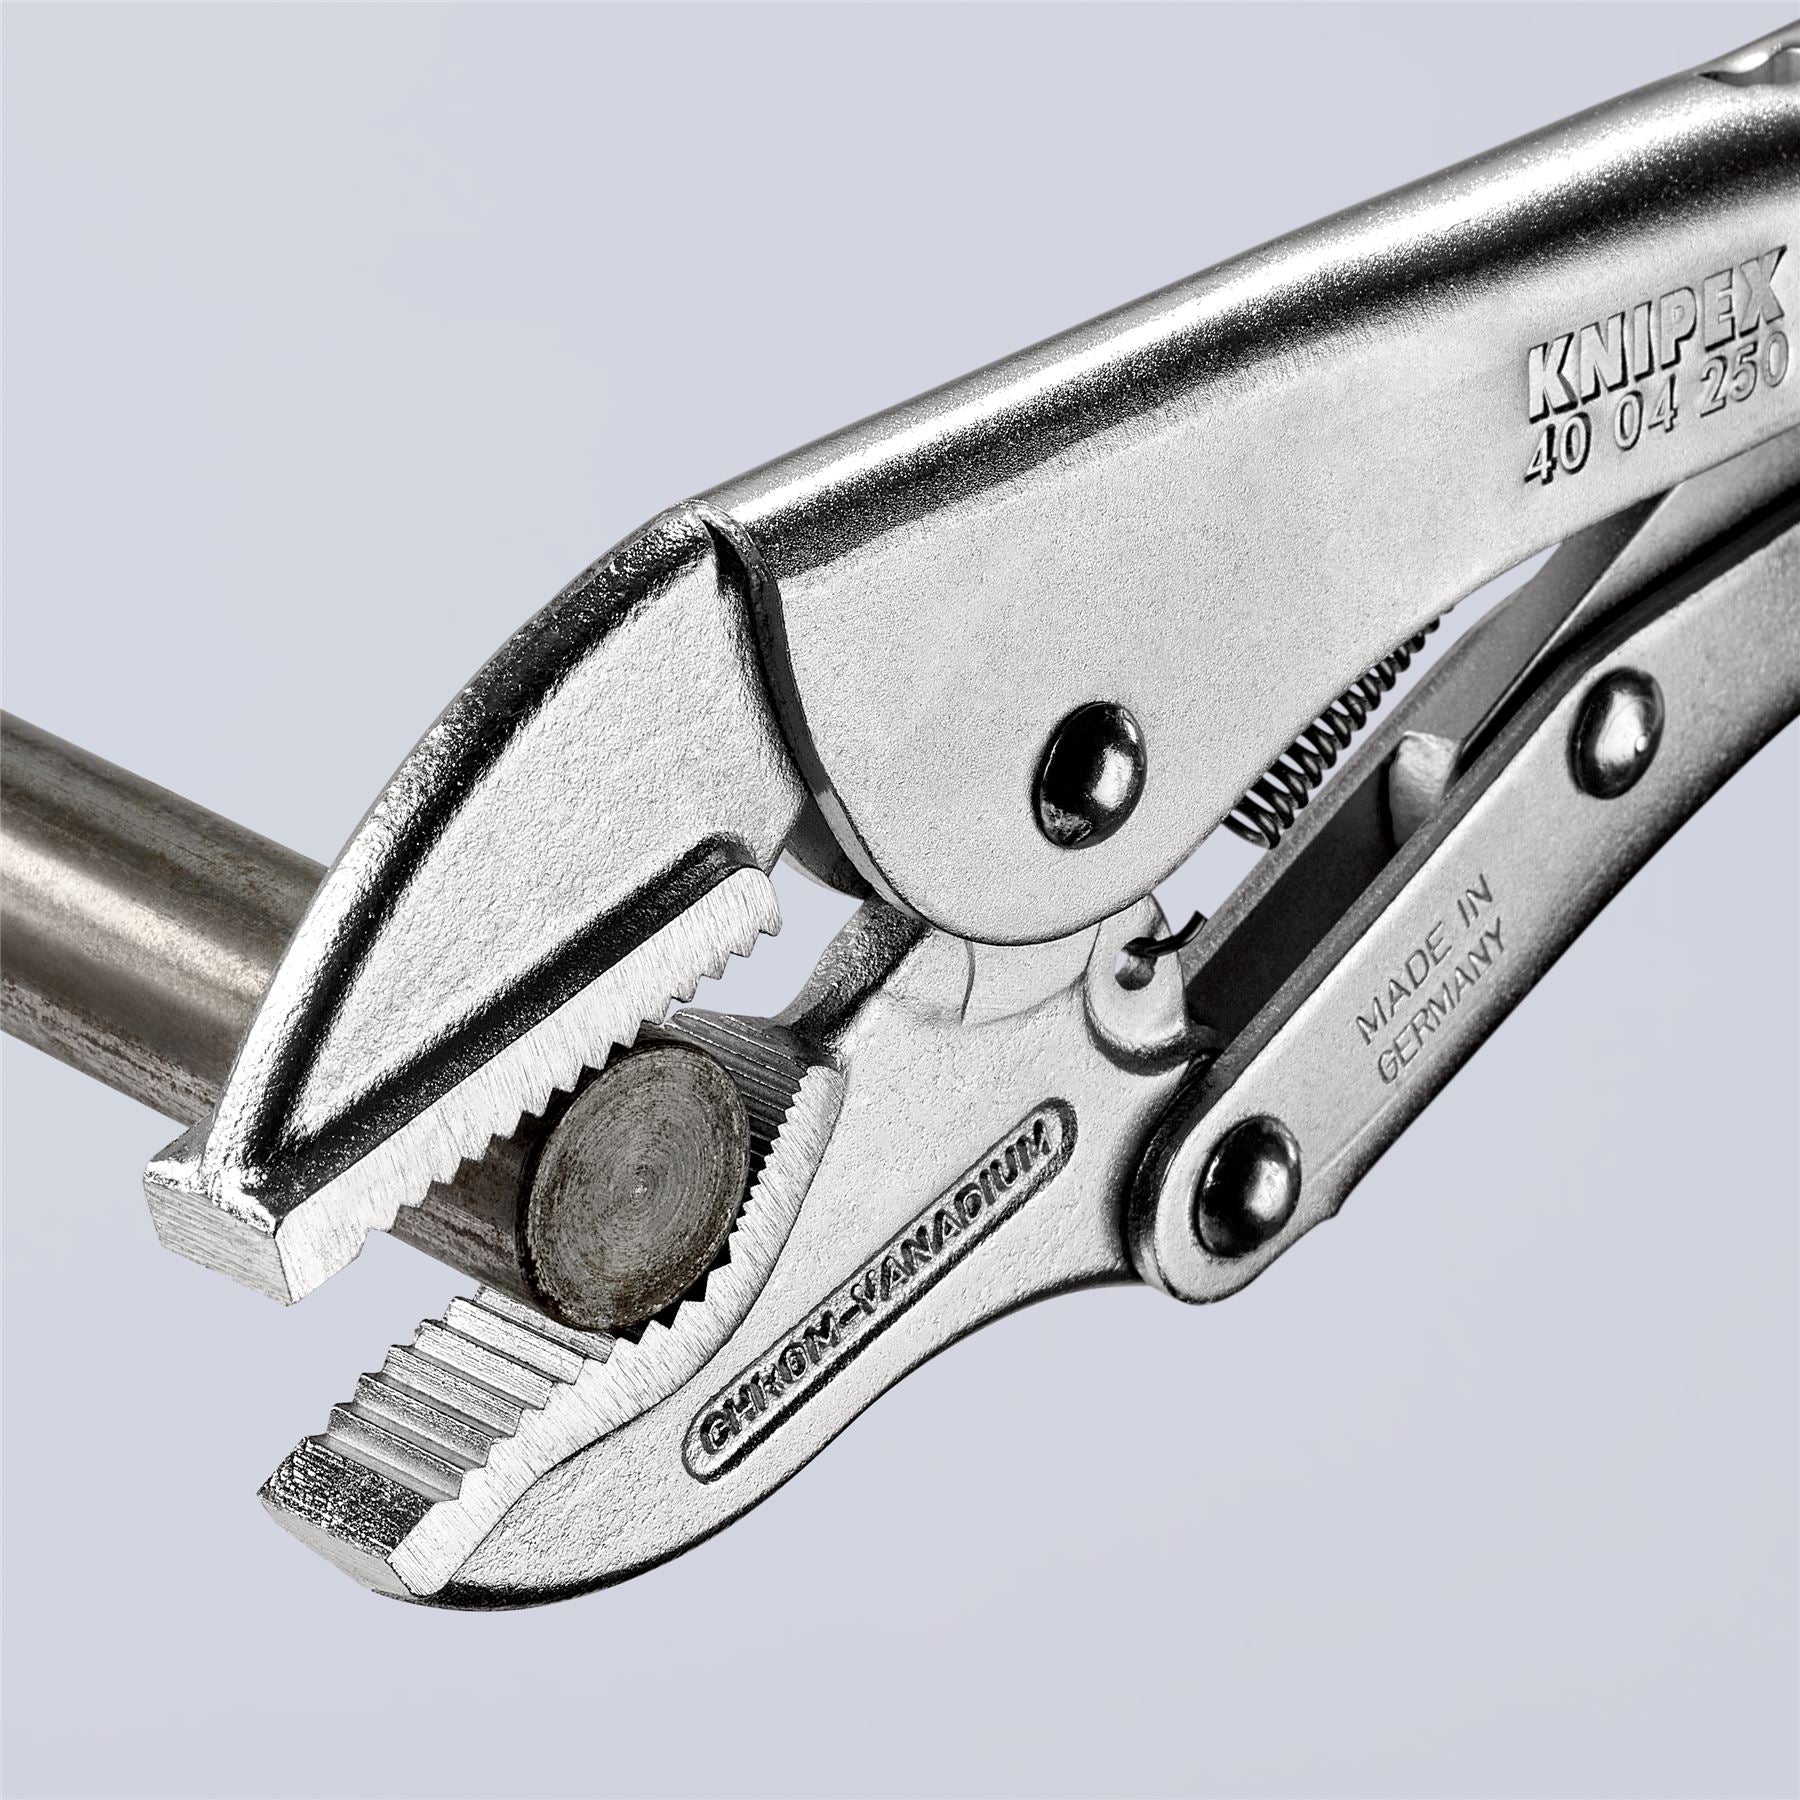 KNIPEX Universal Grip Locking Pliers Mole Grips 250mm Galvanised 40 04 250